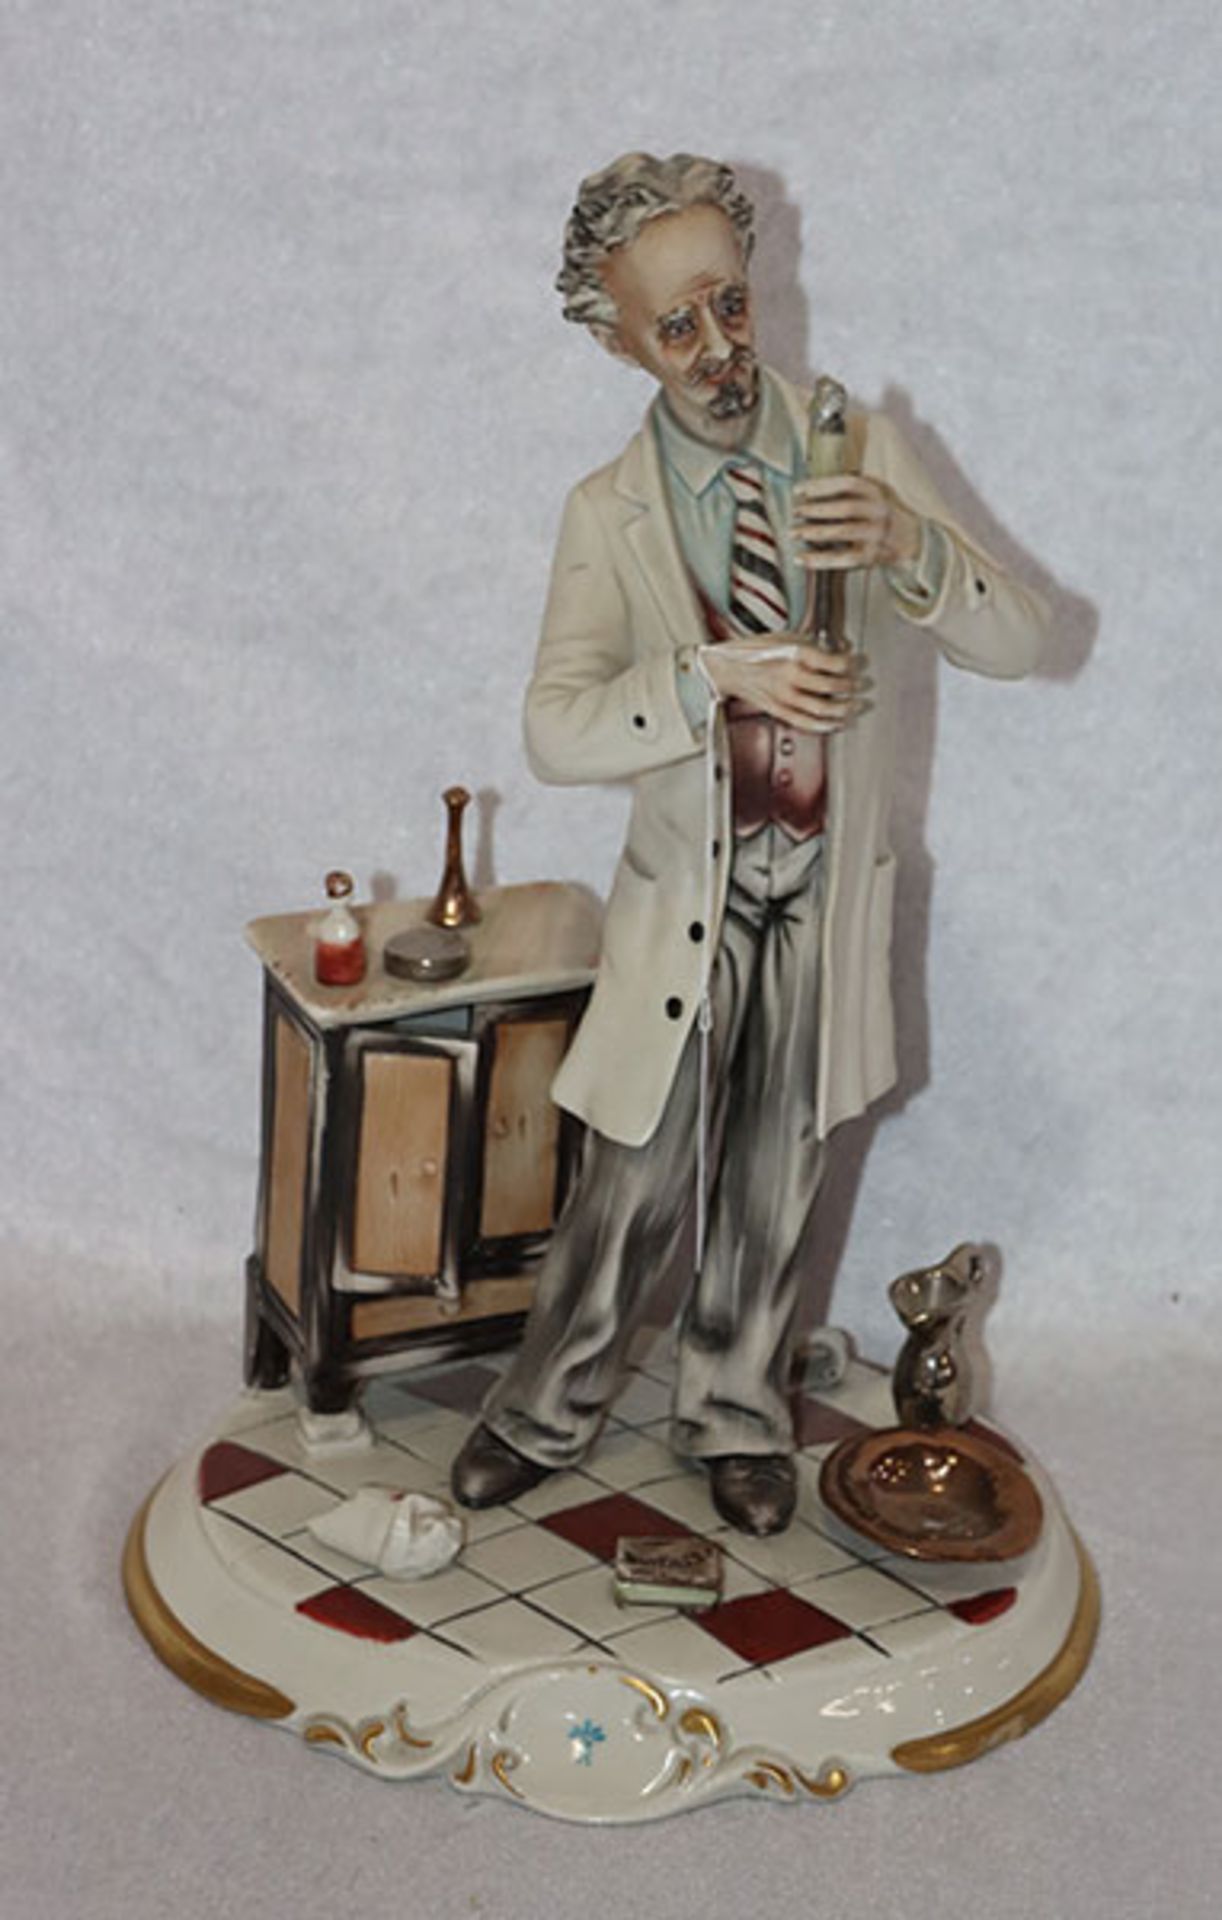 Porzellan Figur 'Mediziner', farbig bemalt, teils bestossen, H 31 cm